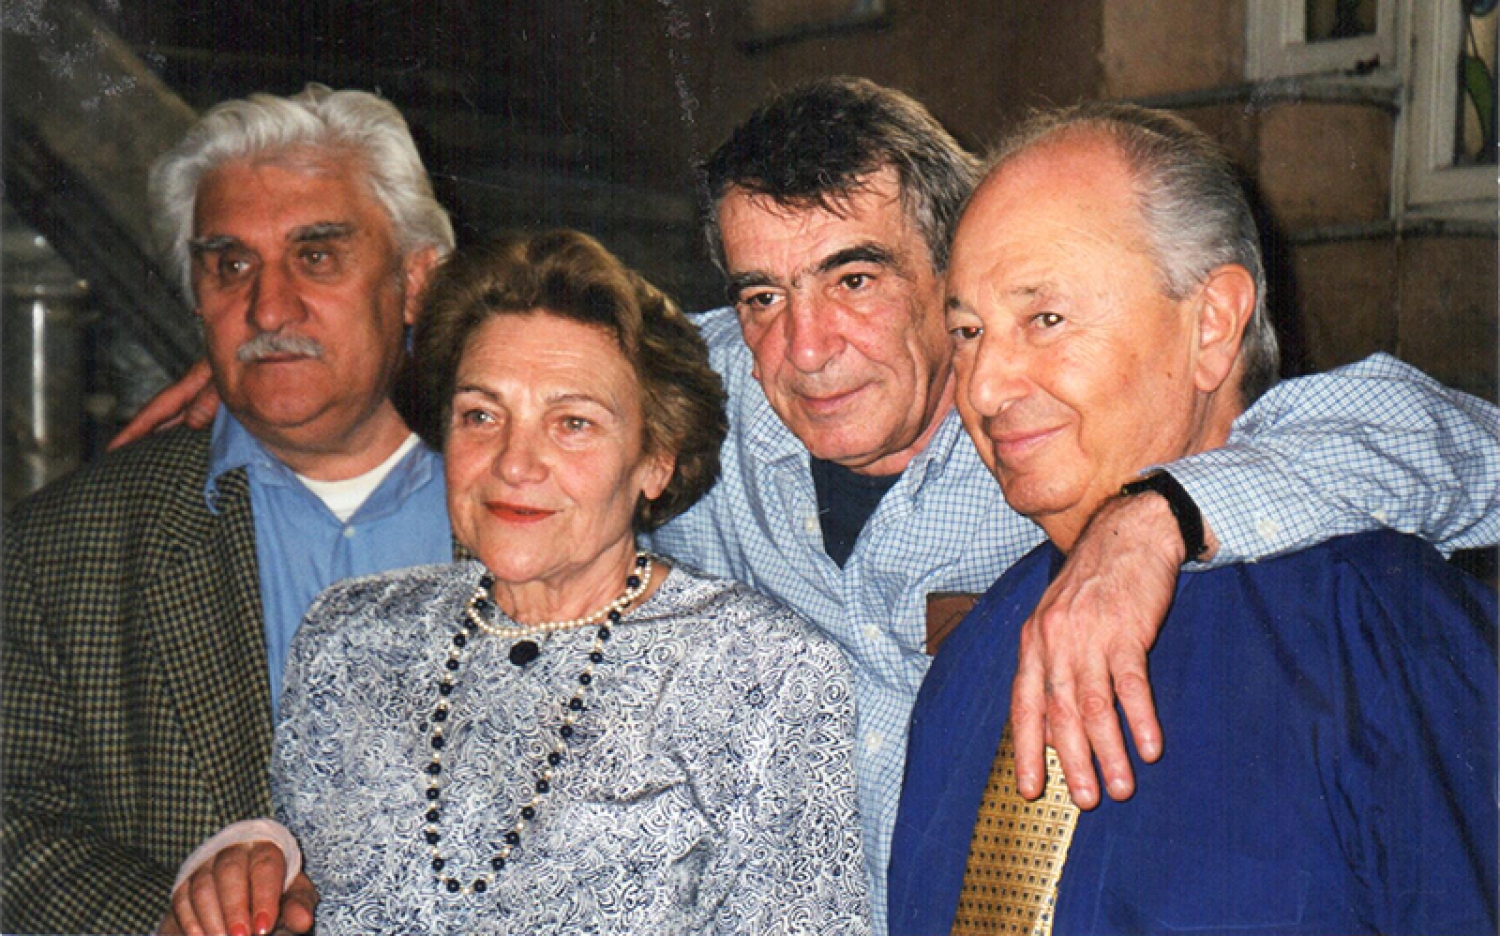 Kenda and Jacob Bar Gera Kenda and Jacob Bar-Gera with Vladimir Nemukhin and Eduard Steinberg